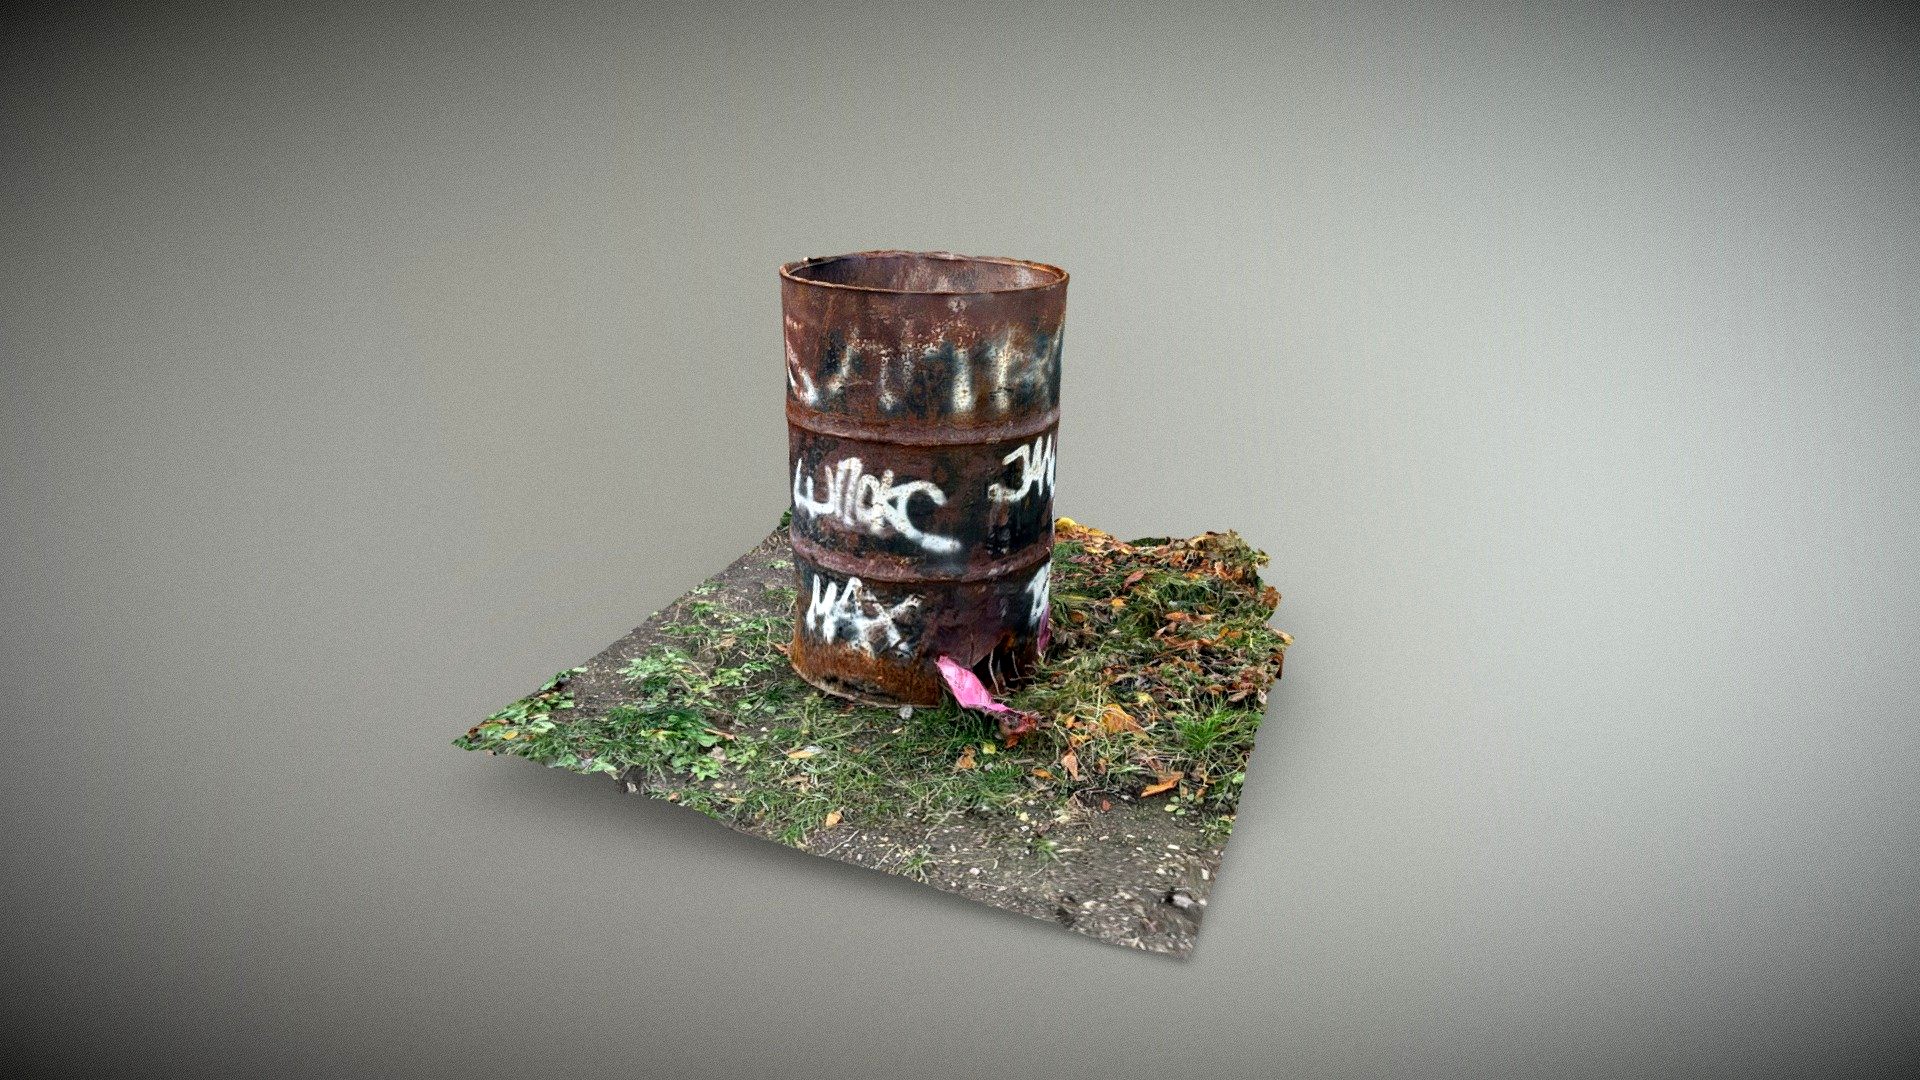 Trash bin / old oil barrel with graffiti